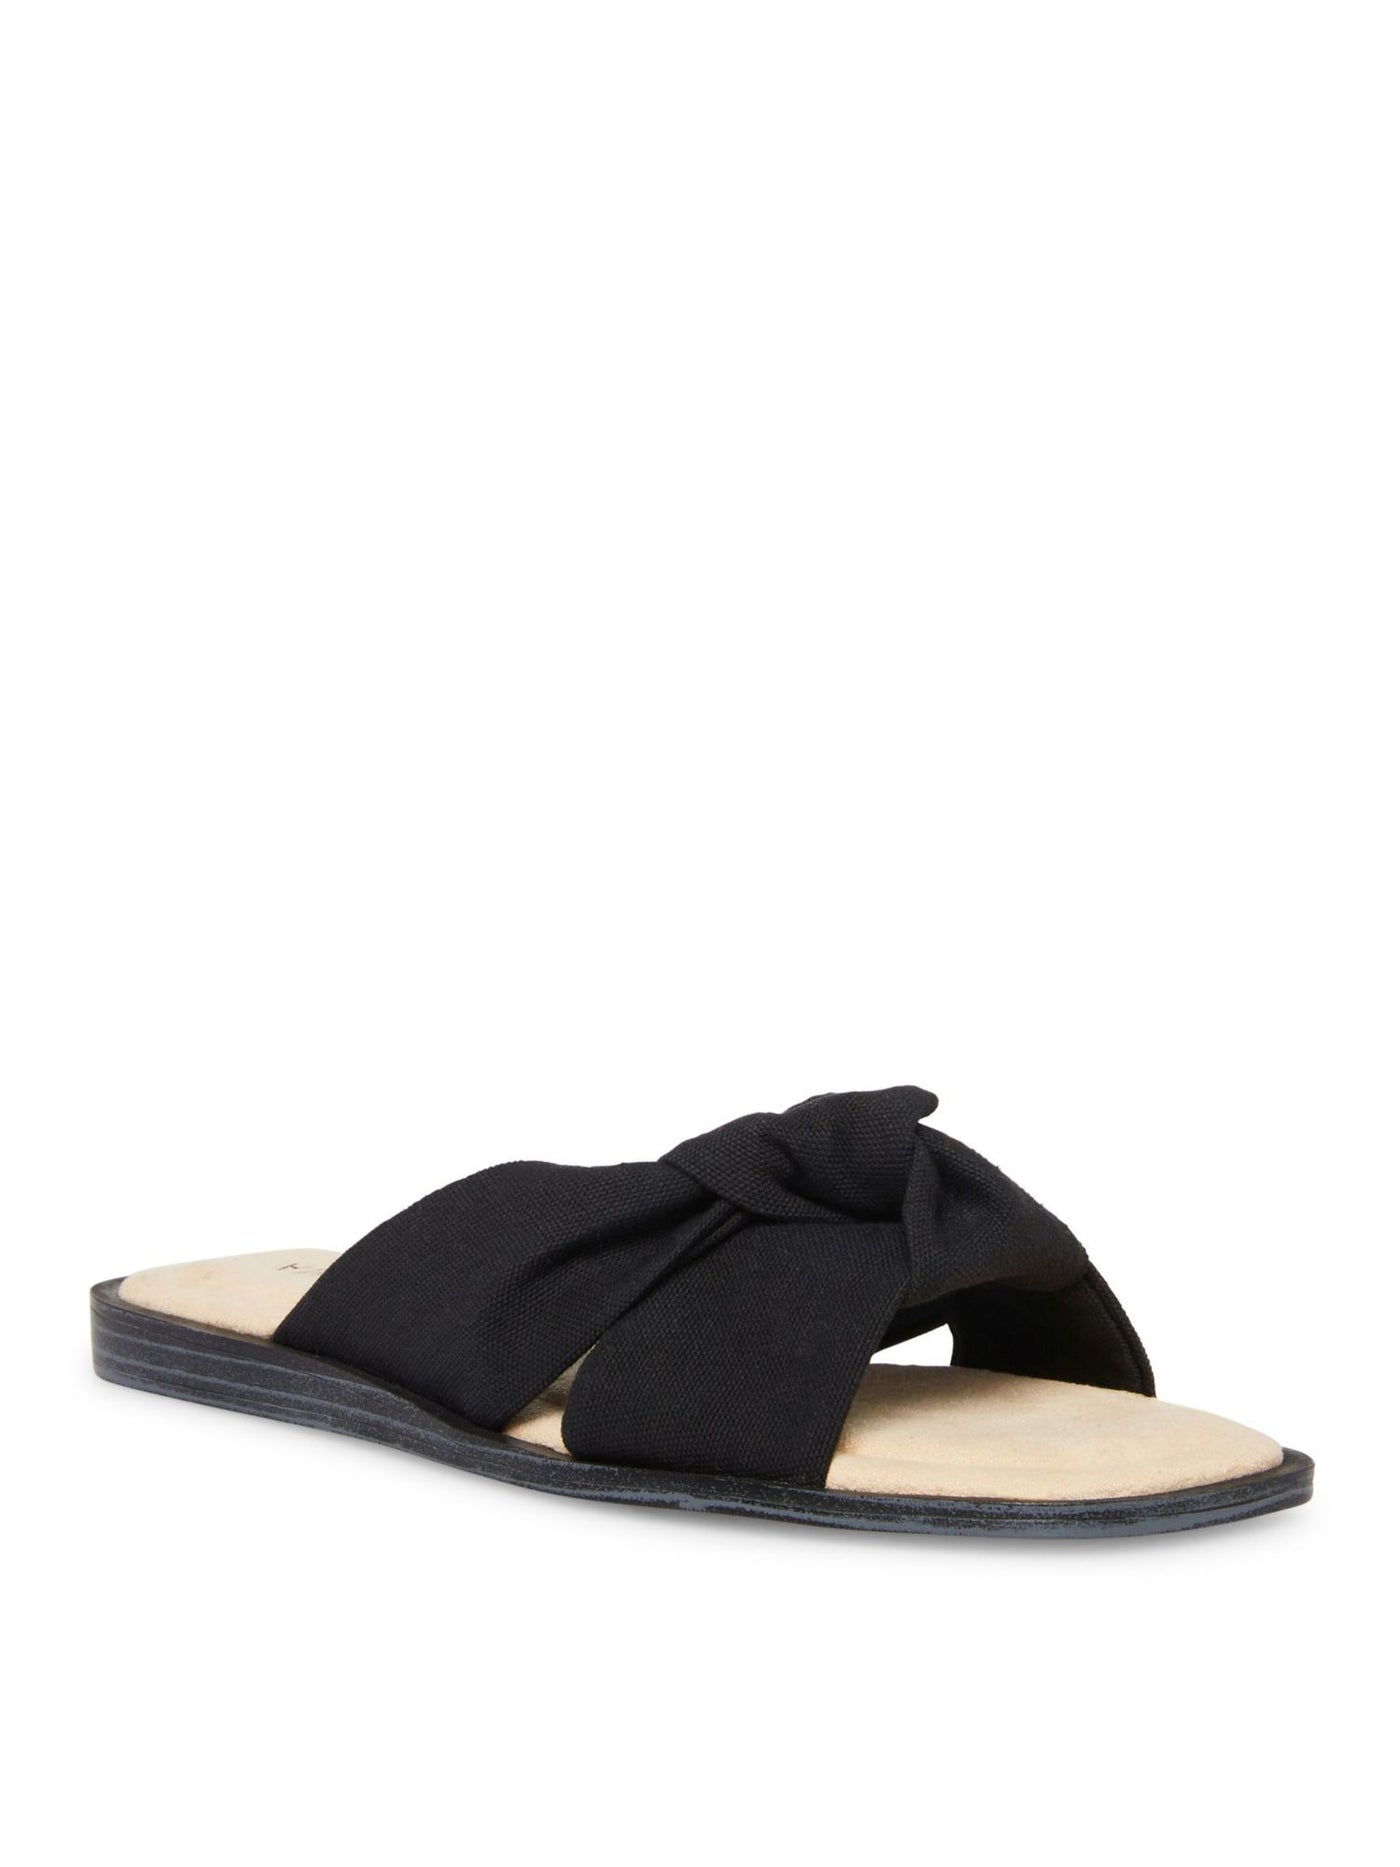 ANNE KLEIN Womens Black Padded Domani Square Toe Slip On Slide Sandals Shoes 10 M